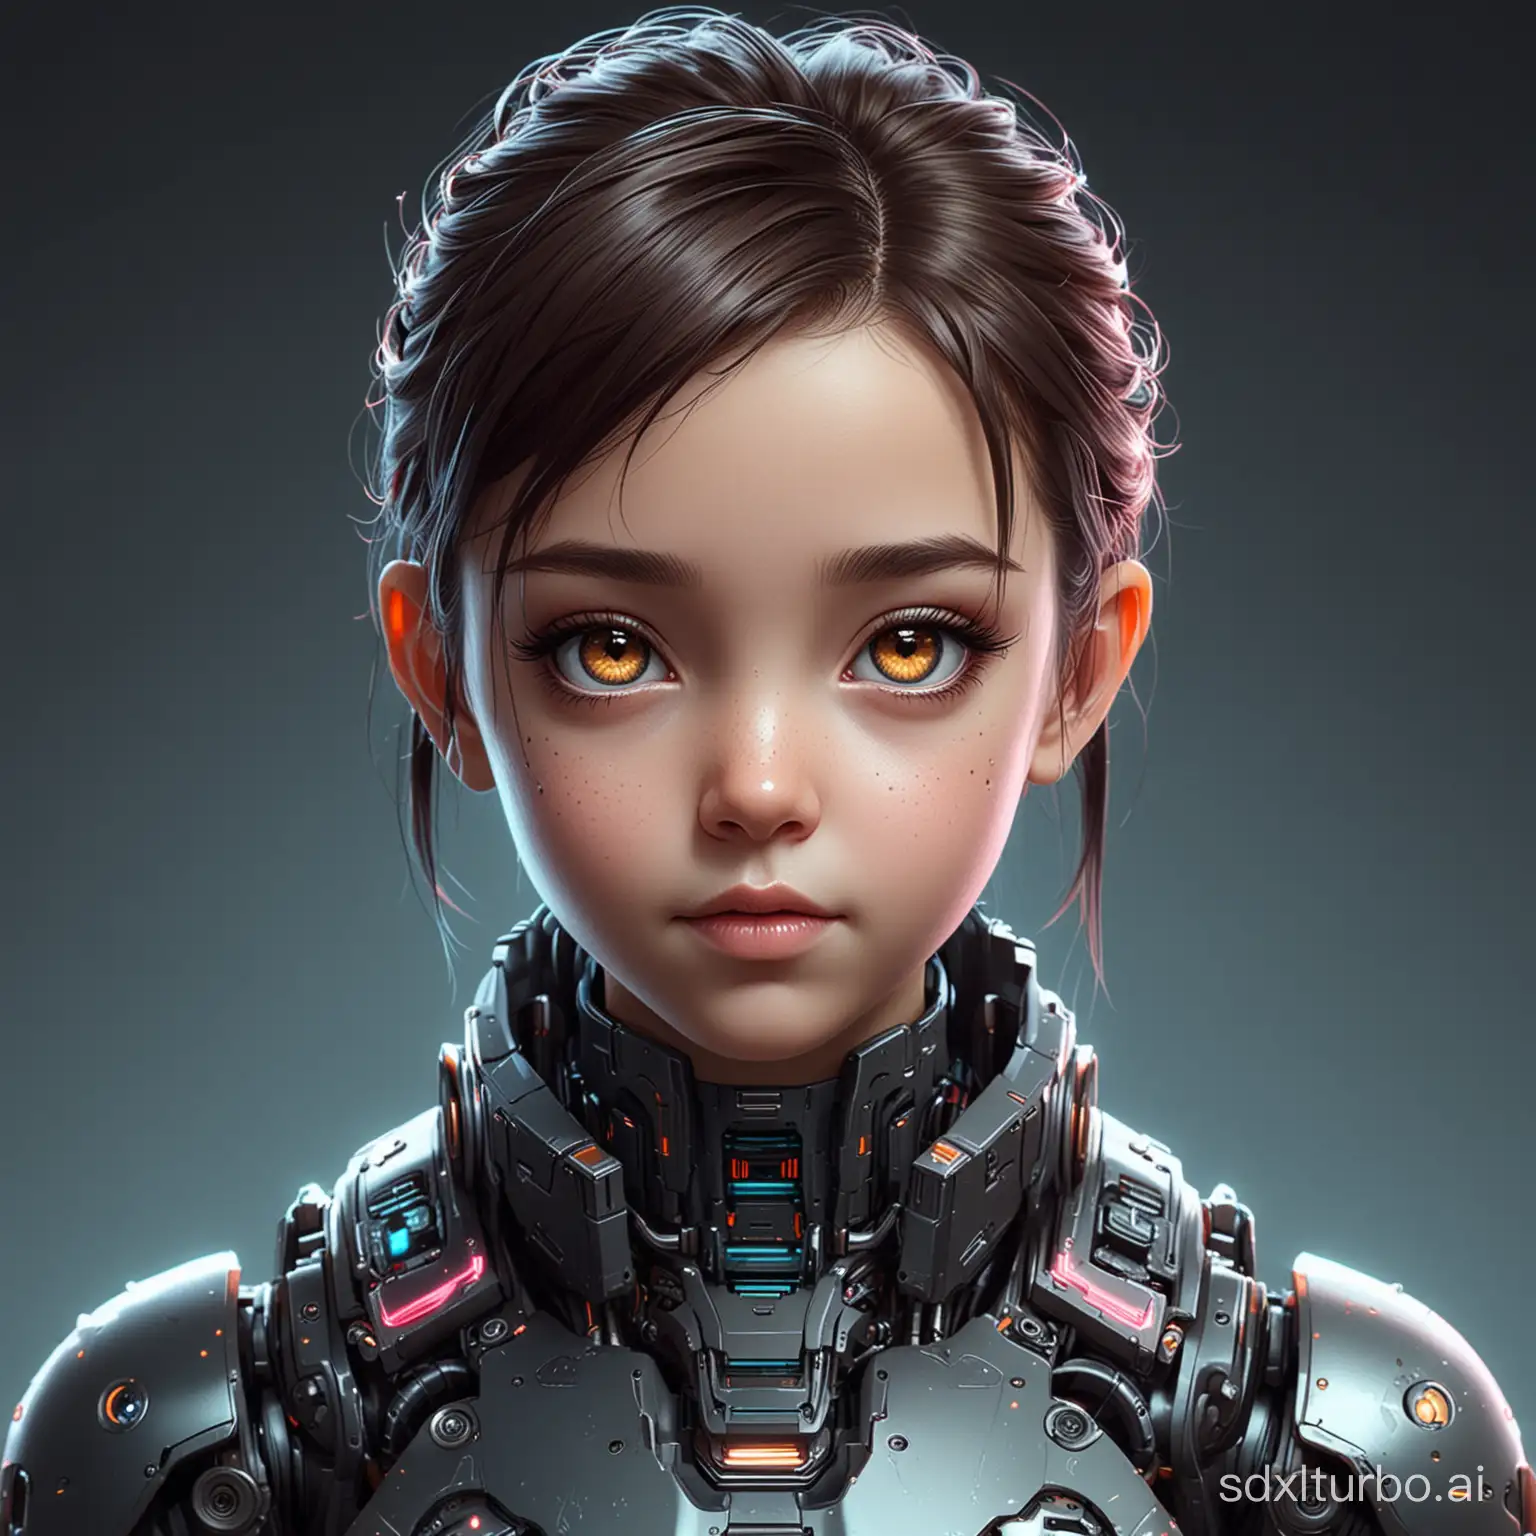 little girl, Cyberpunk style robot avatar, digital style, high quality